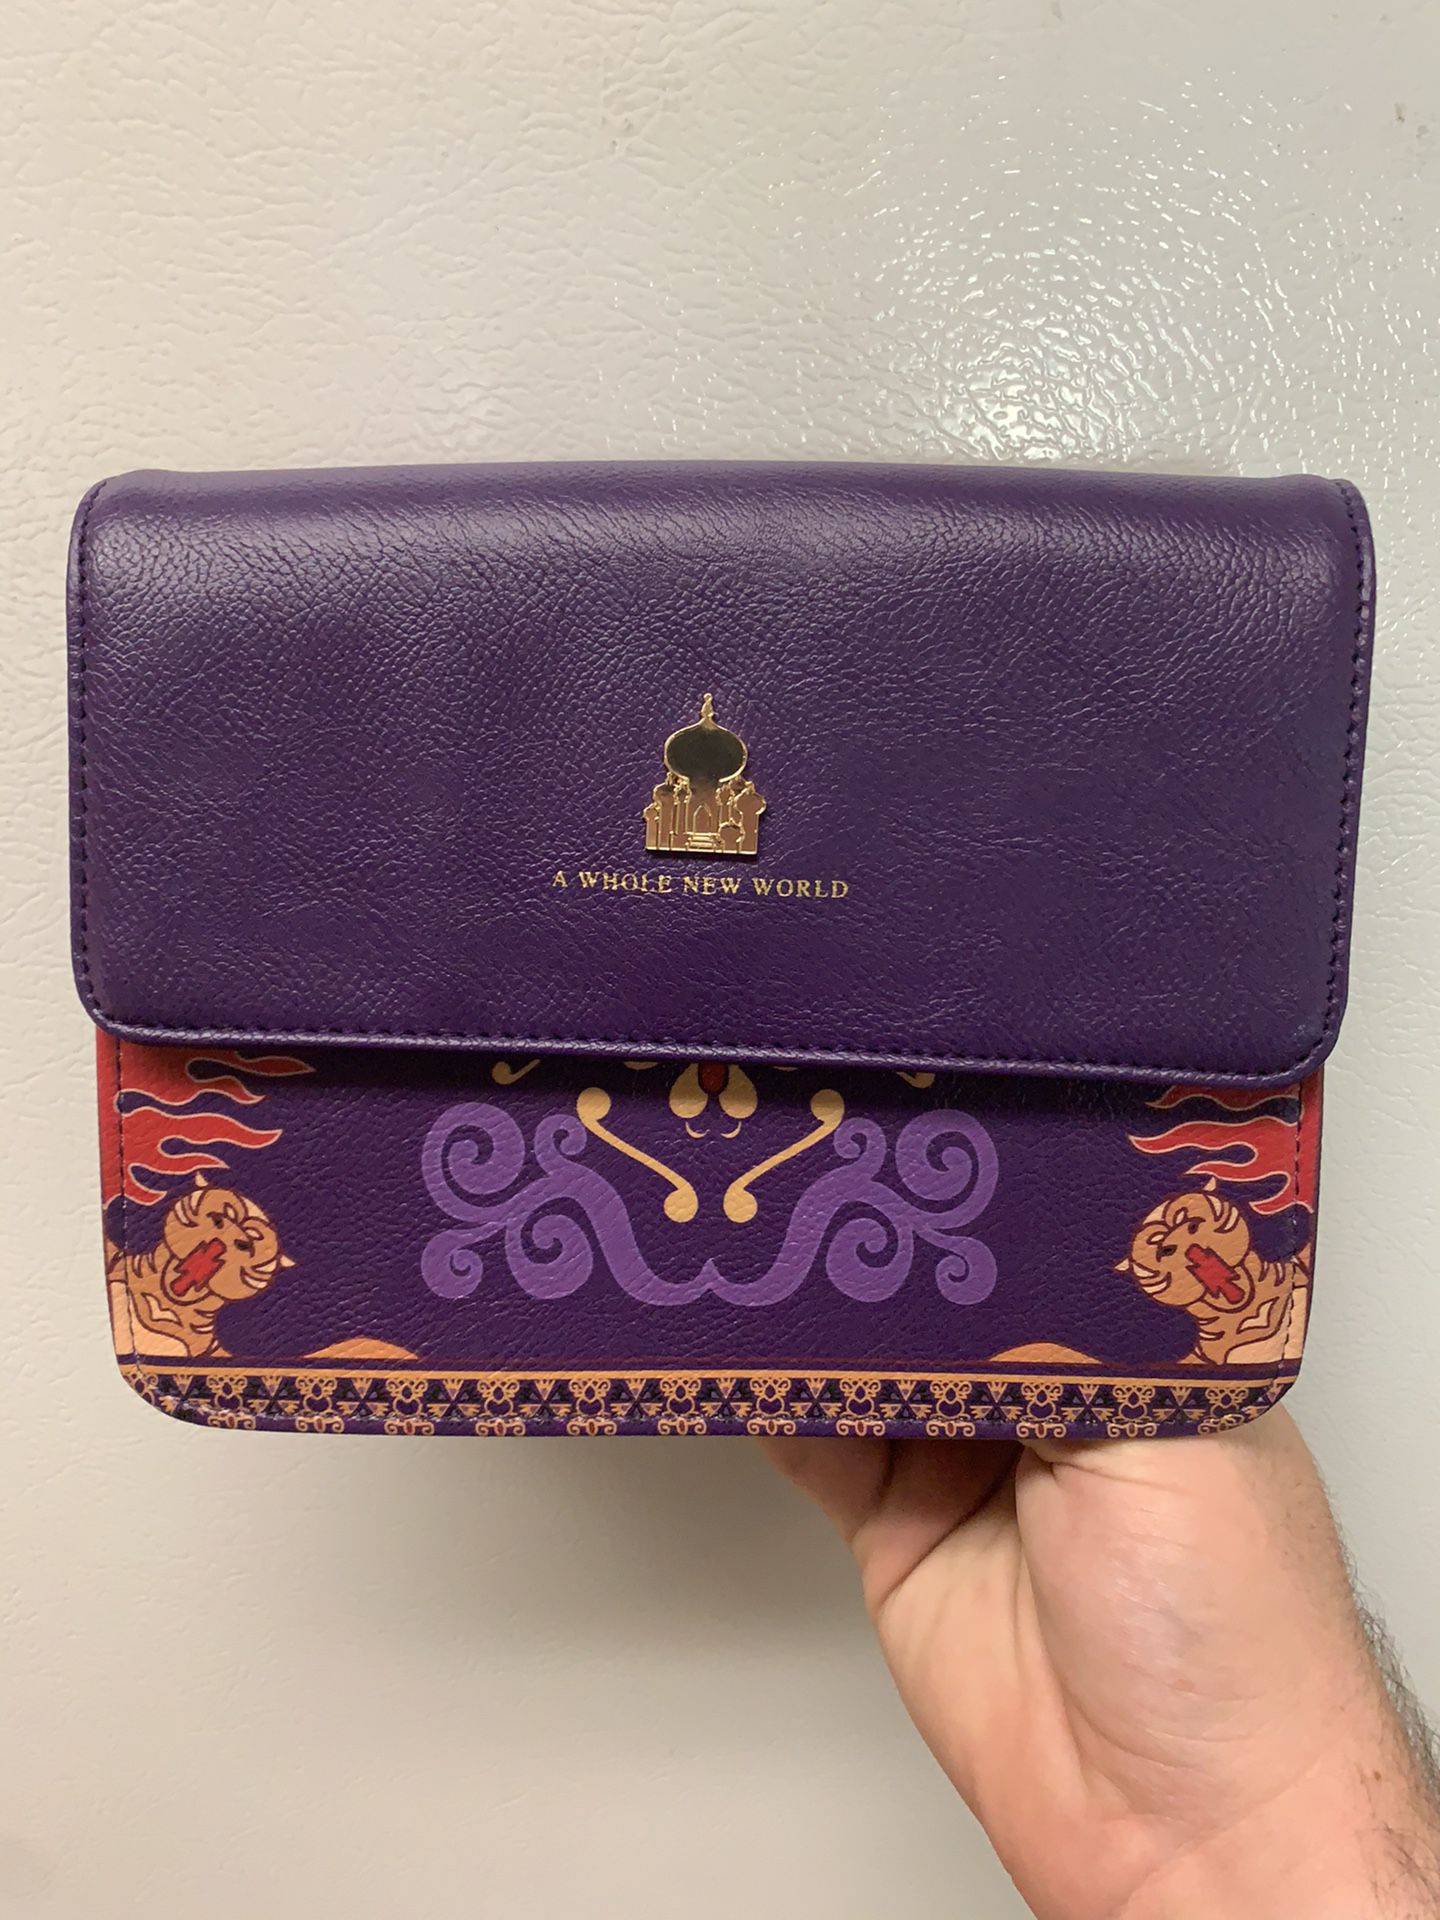 Disney Aladdin Loungefly Cross Body Bag perfect condition